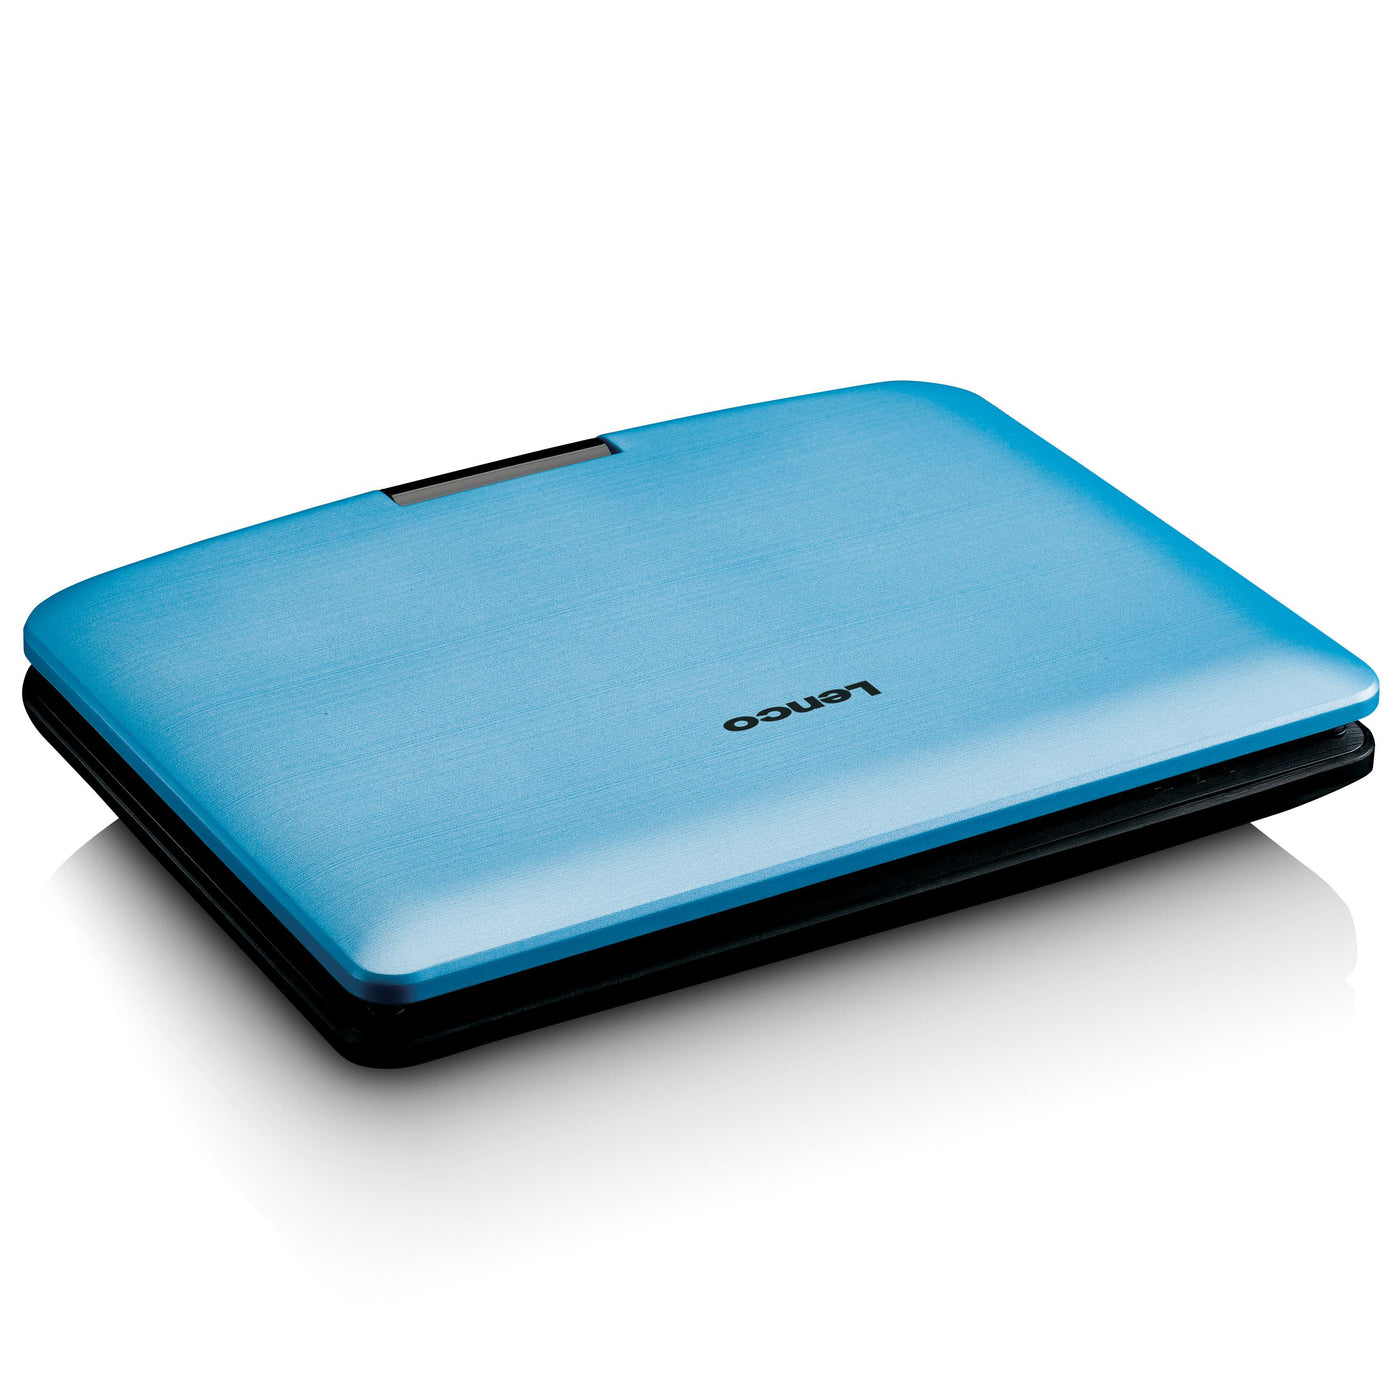 LENCO DVP-910BU - Portable 9" DVD player with USB headphones and mounting bracket - Blue/black